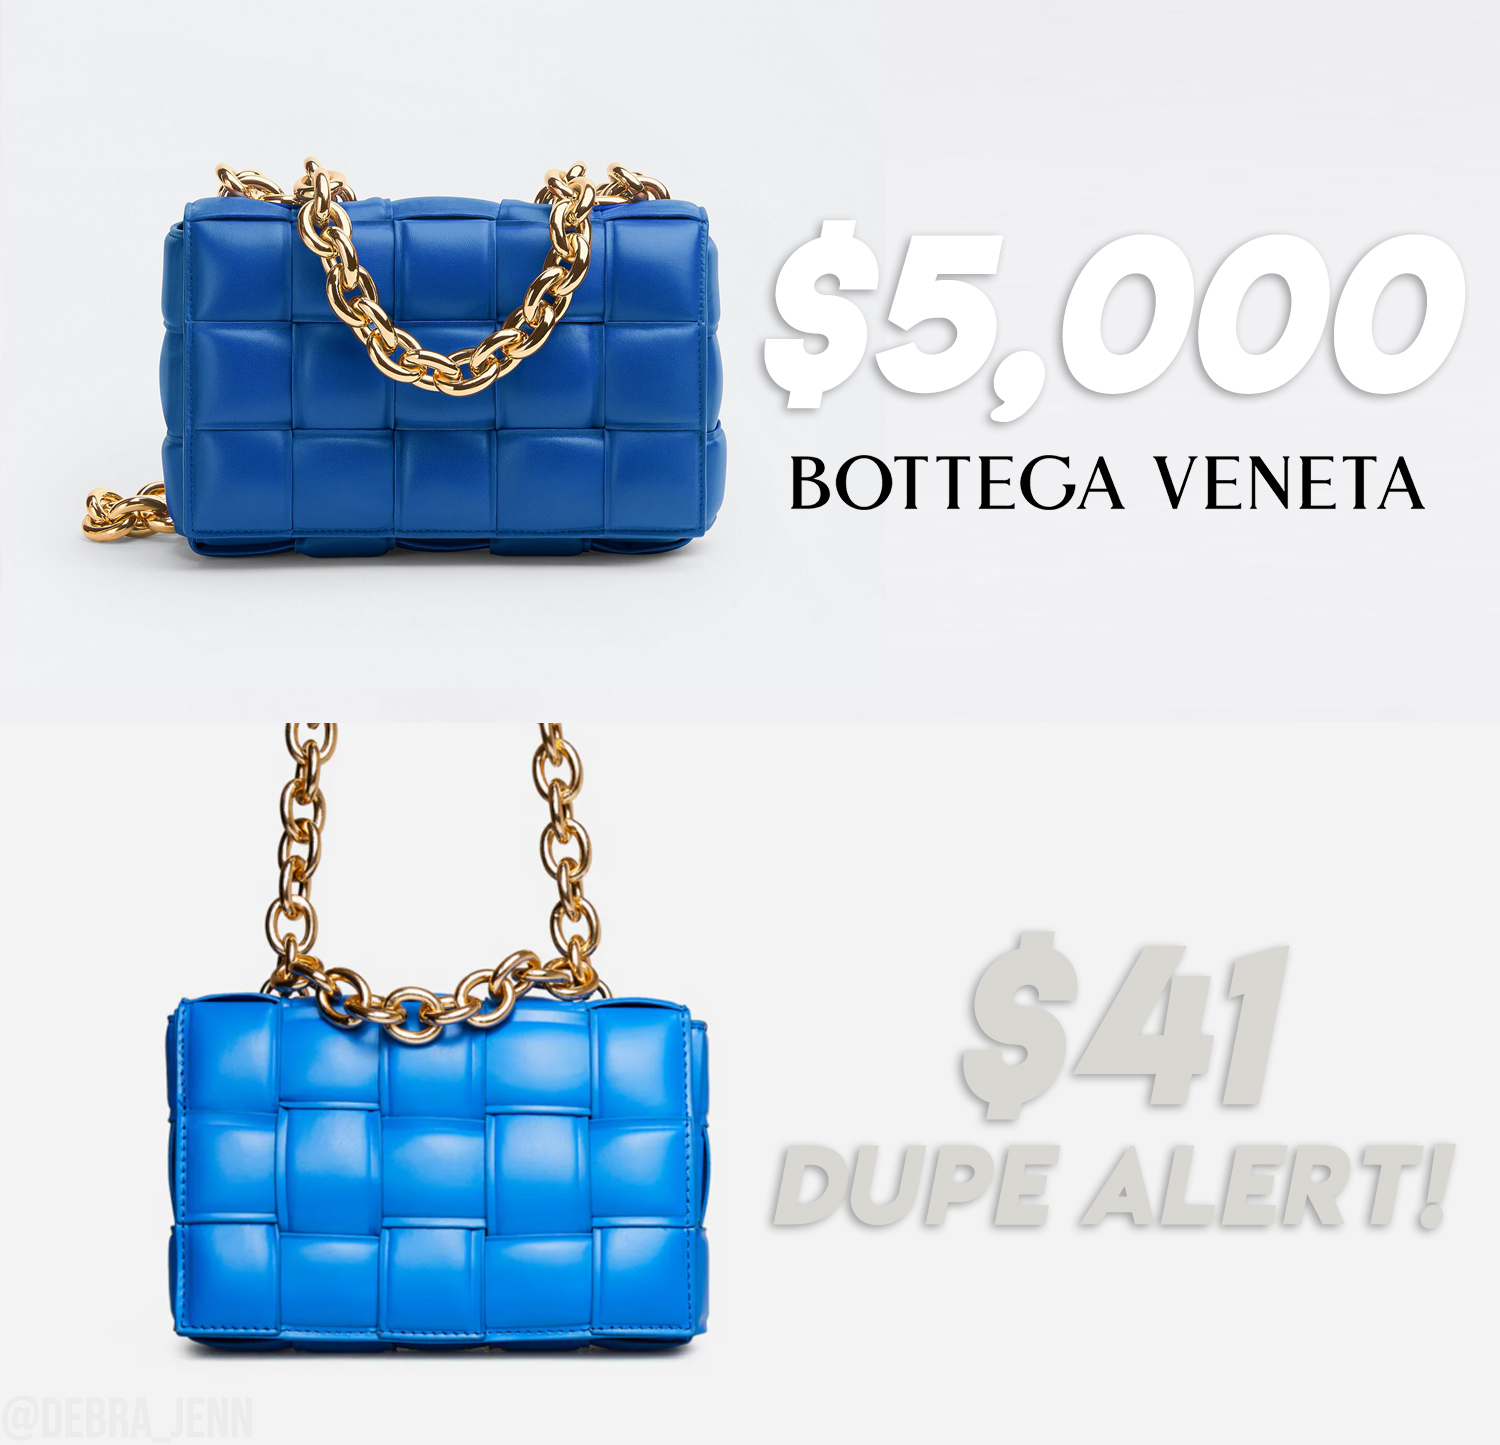 I found designer handbag dupes for brands like Versace and Balenciaga for  thousands of dollars less